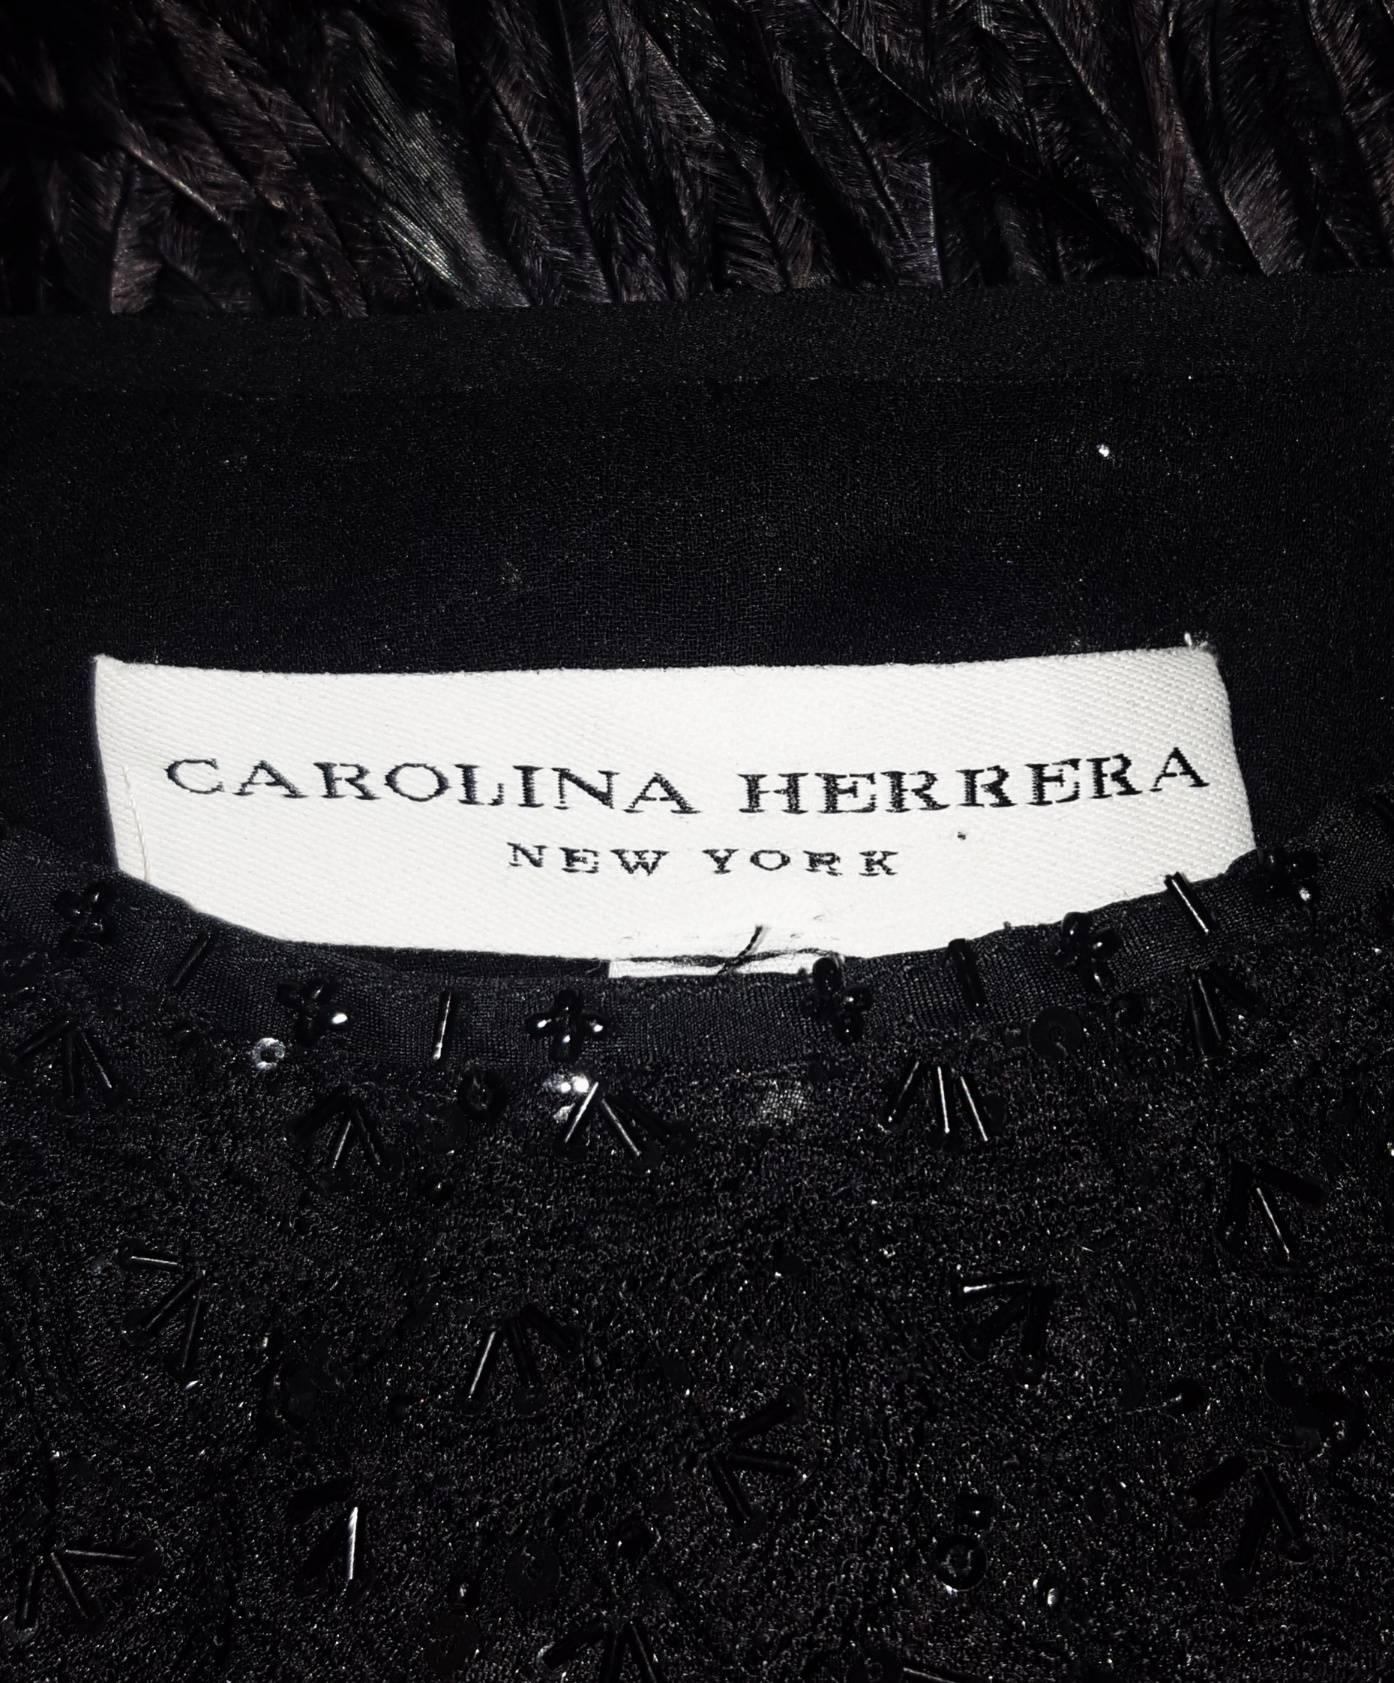 Carolina Herrera Black Beaded Sleeveless Top w/ Ostrich Feathers Trim on Waist  1